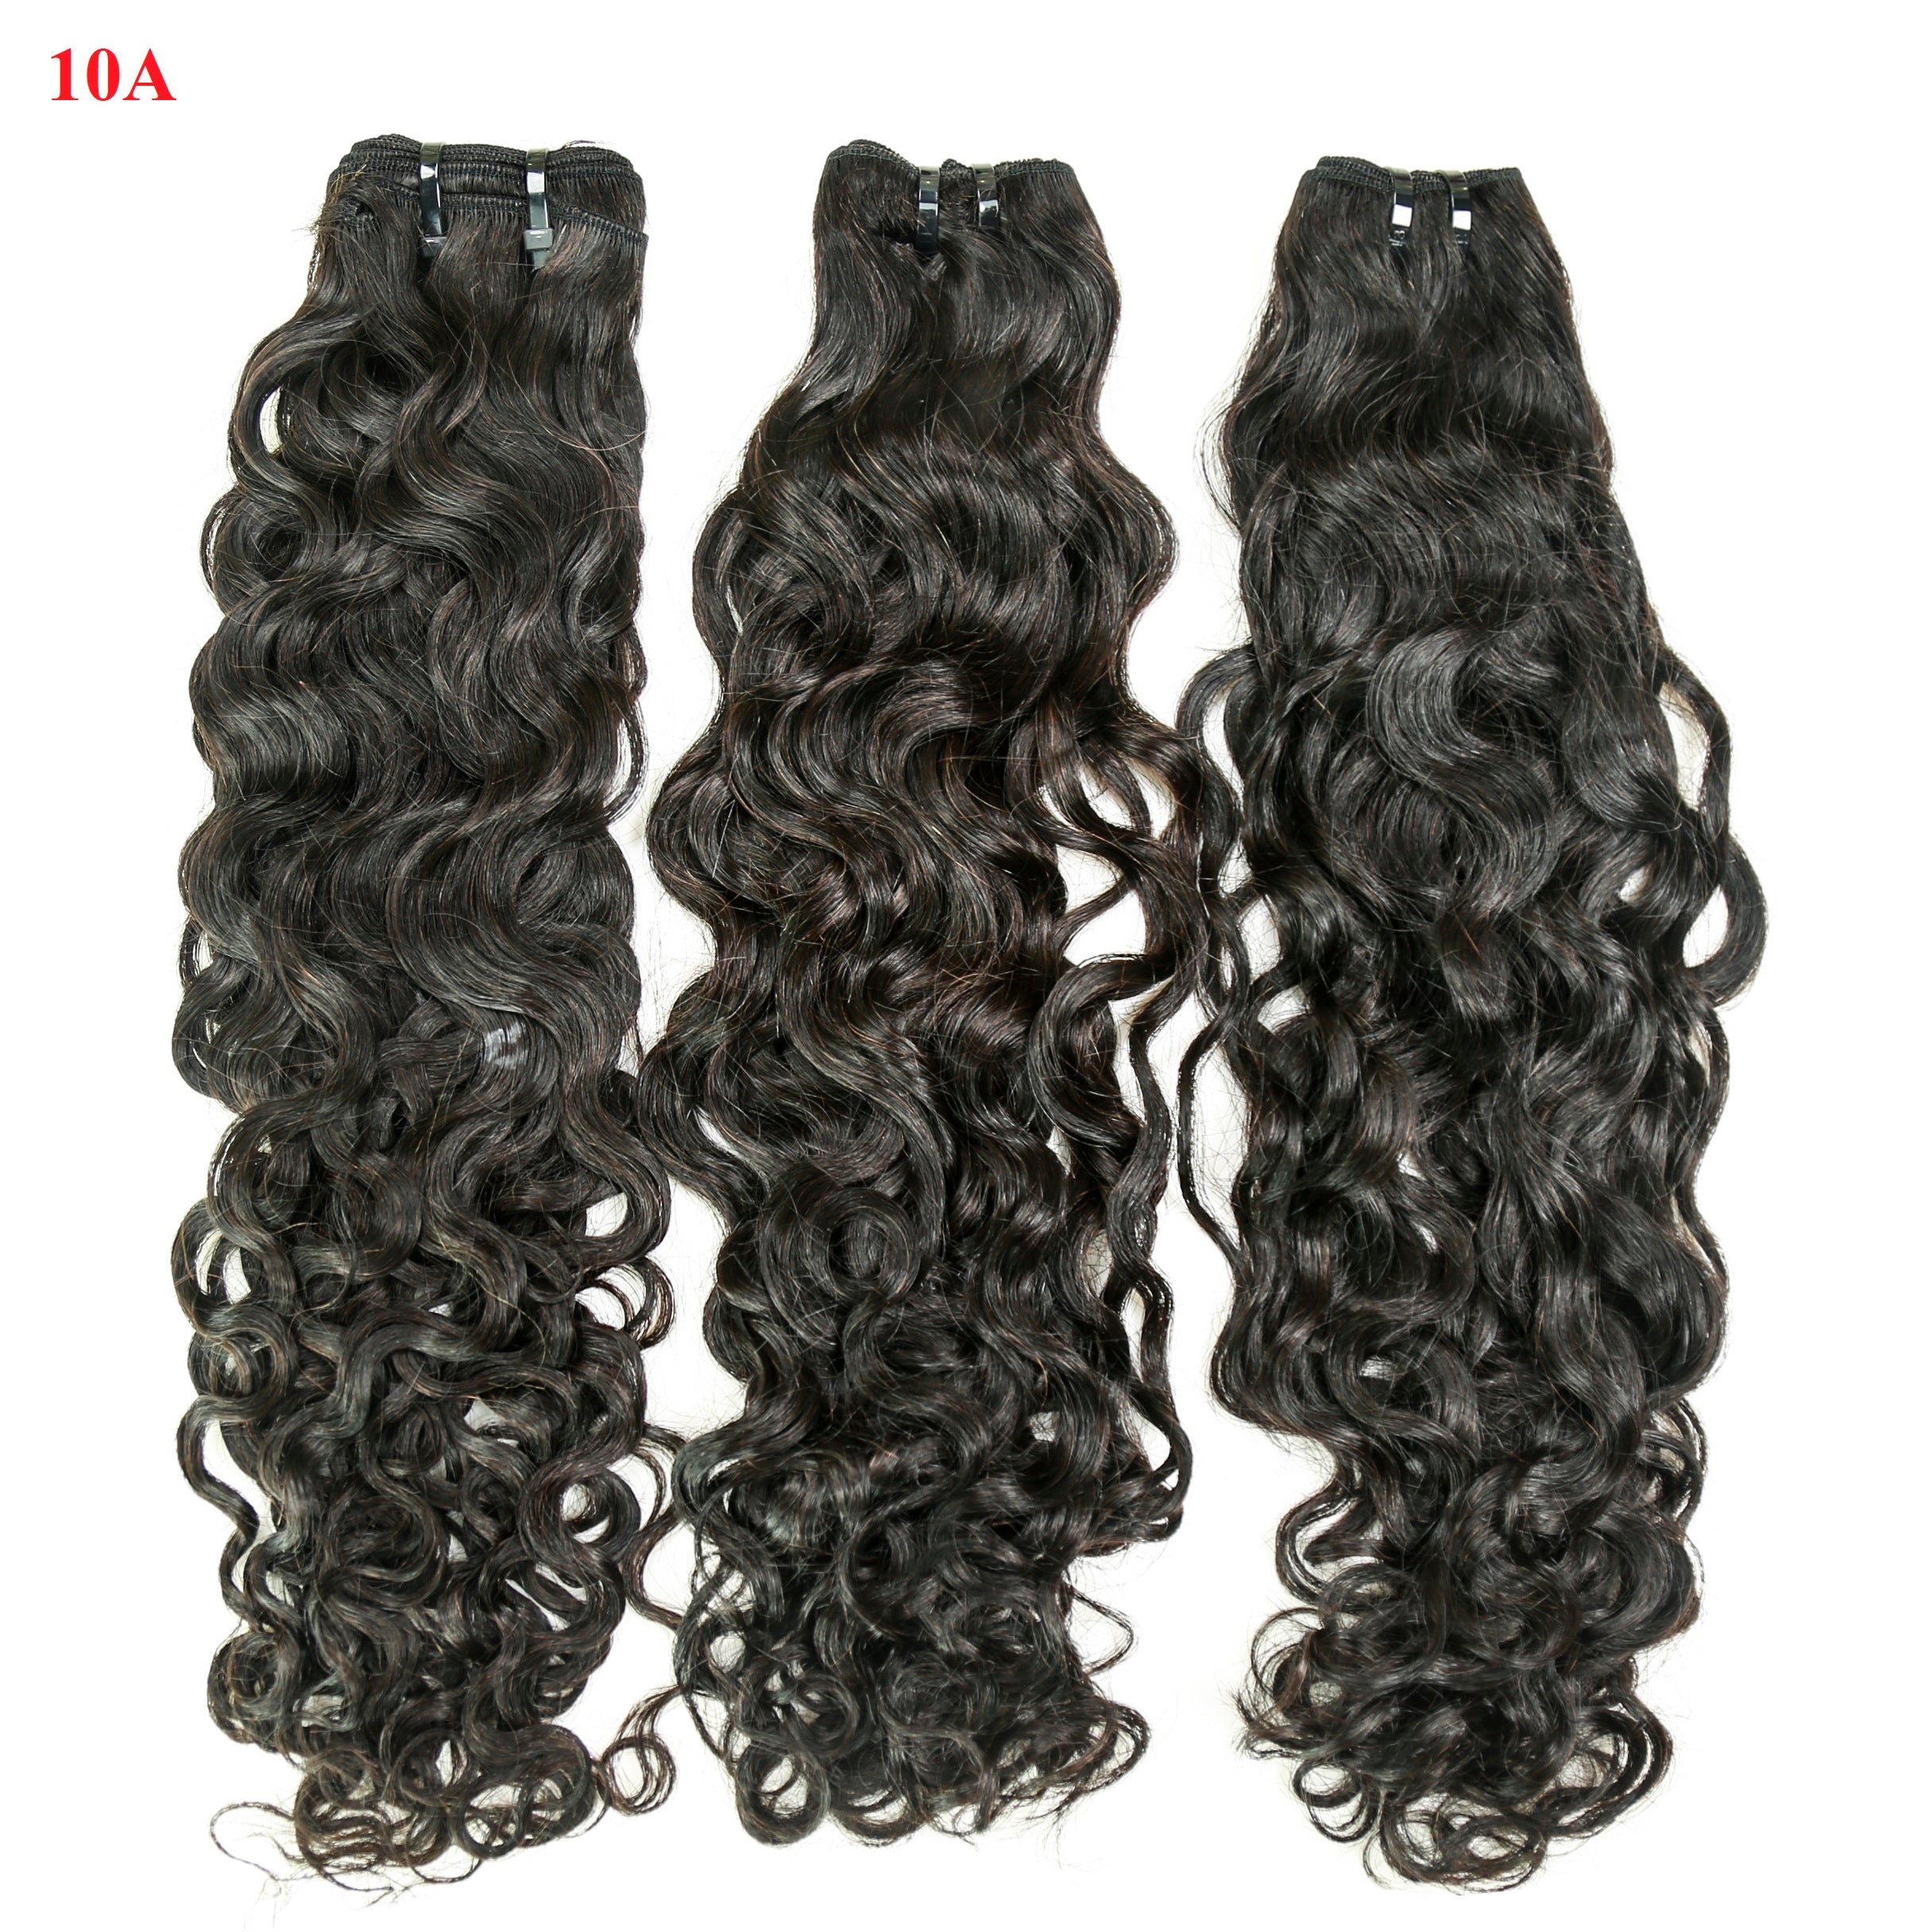 JP Hair 9A/10A12A Brazilian Water Wave 3 Bundles Human Hair Bundles with 5x5 Closure Small Knots